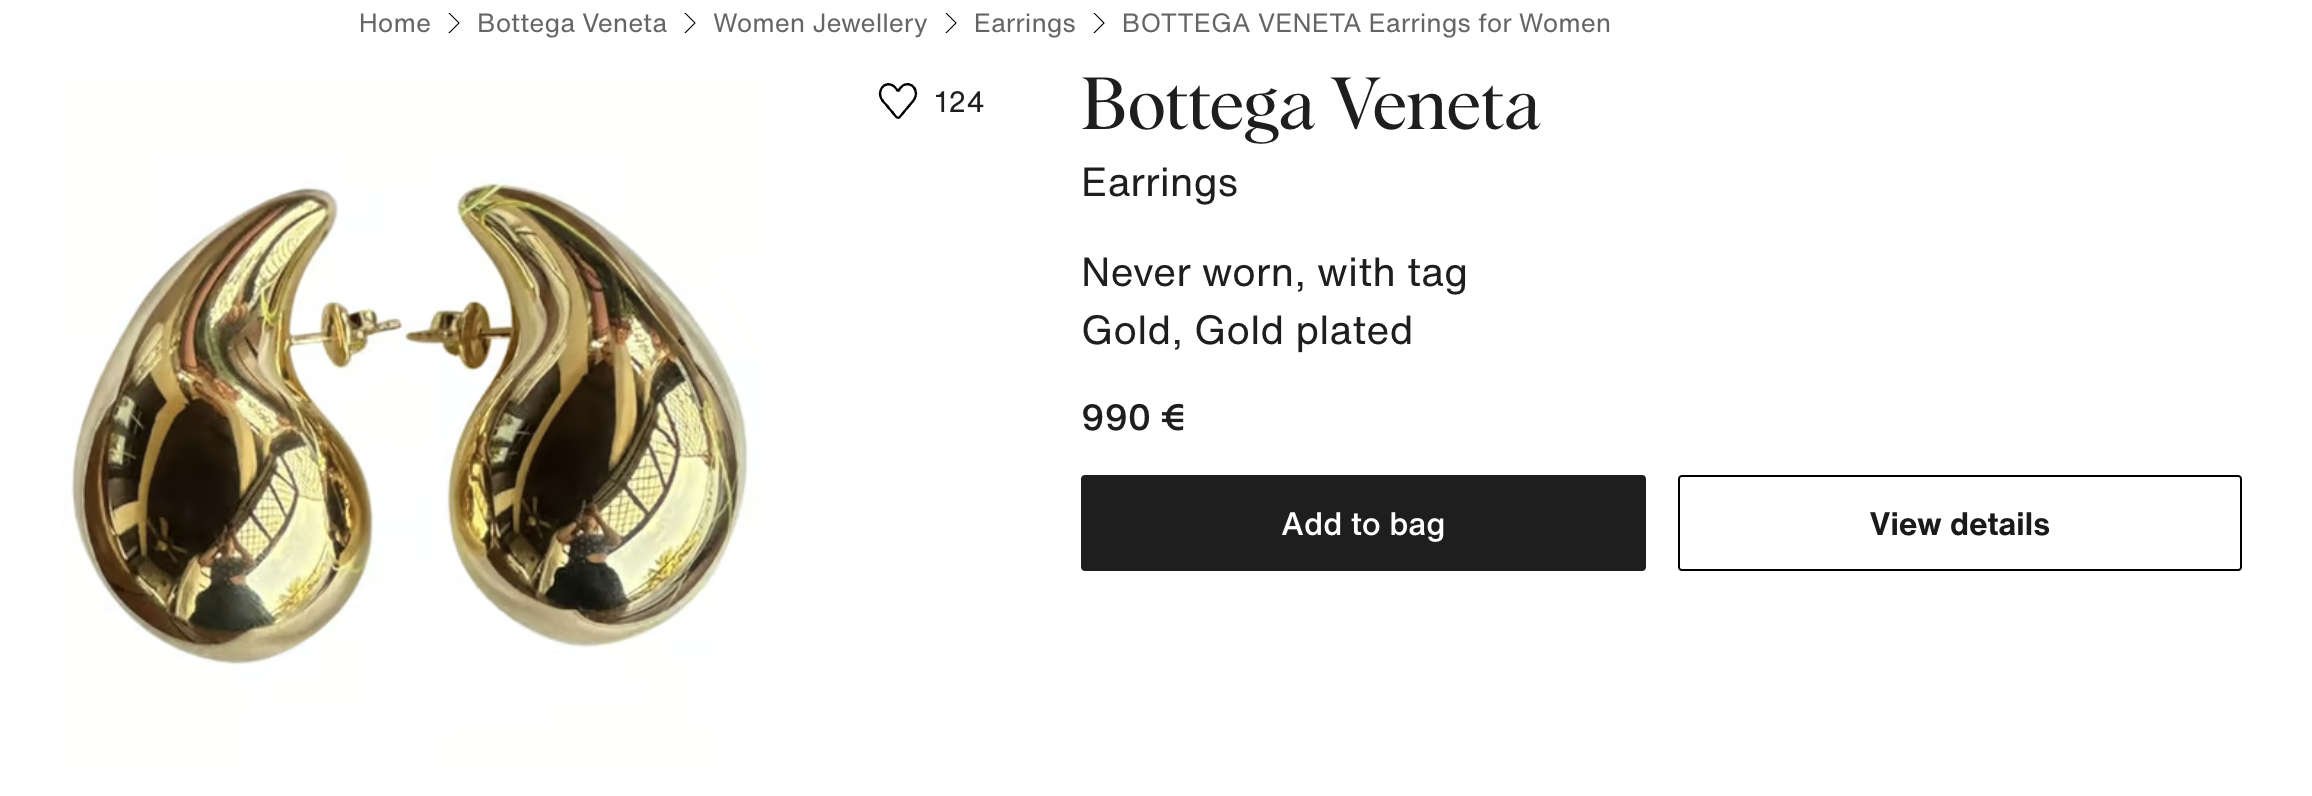 Channel Hailey Bieber's Bottega Veneta Bag With This Lookalike